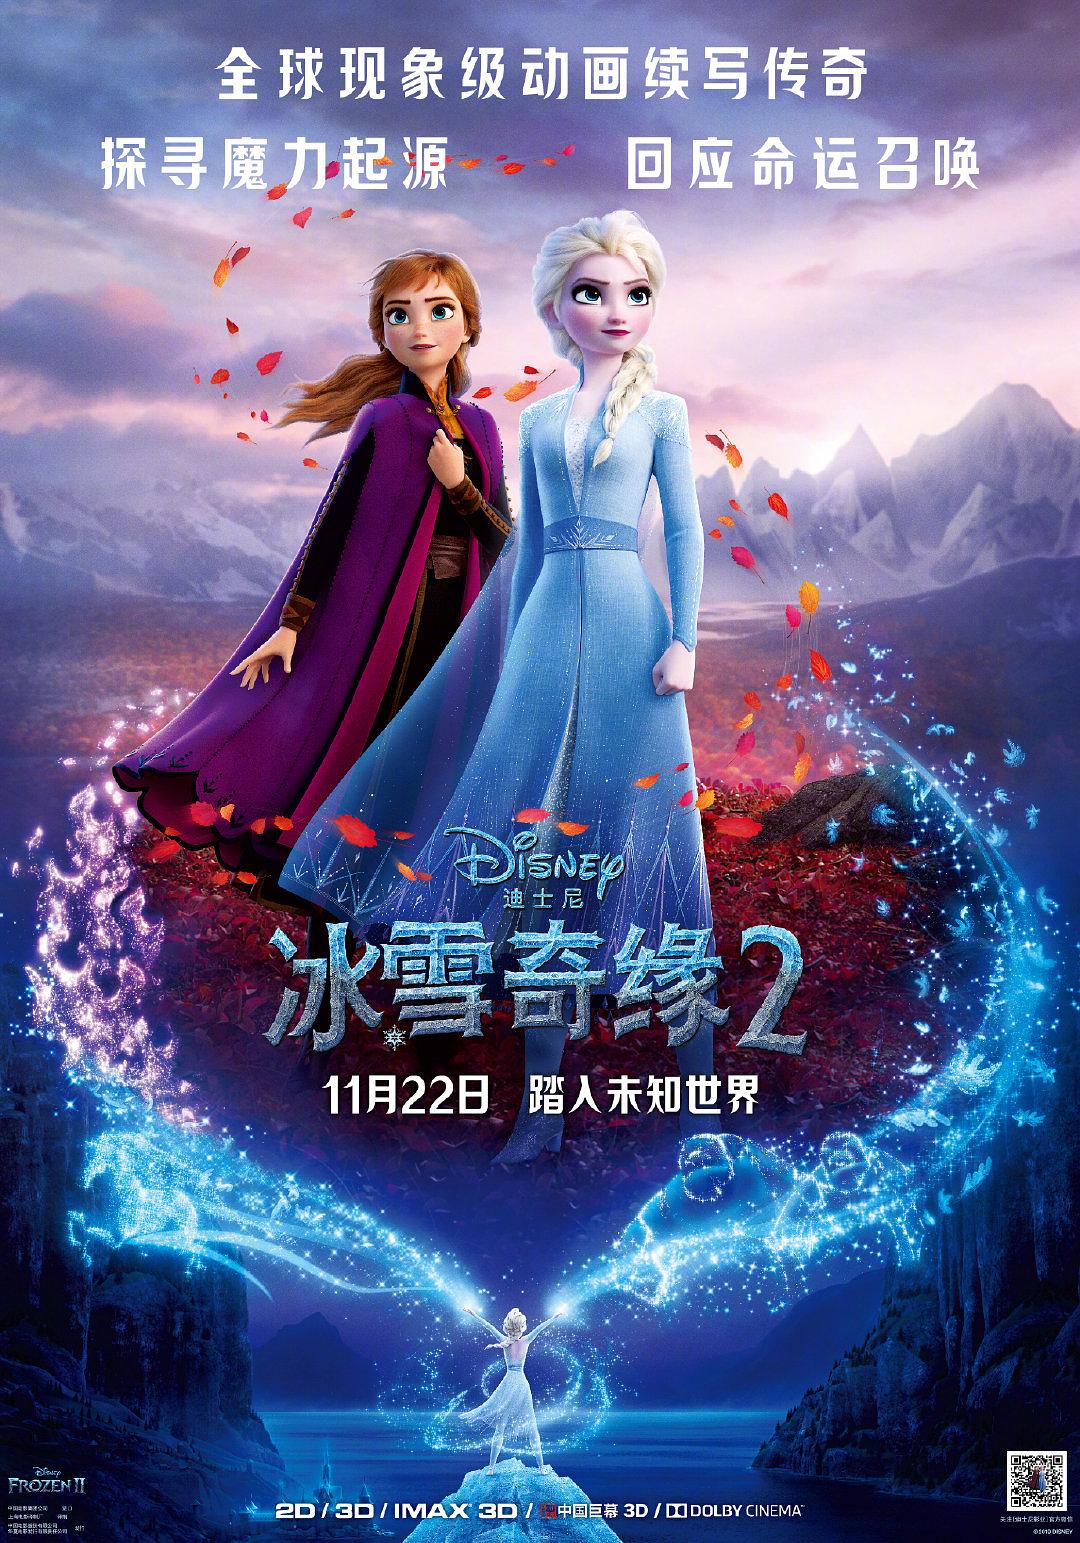 冰雪奇缘2 Frozen.II.2019.2160p.BluRay.REMUX.HEVC.DTS-HD.MA.TrueHD.7.1.Atmos-FGT 56.99GB-1.png